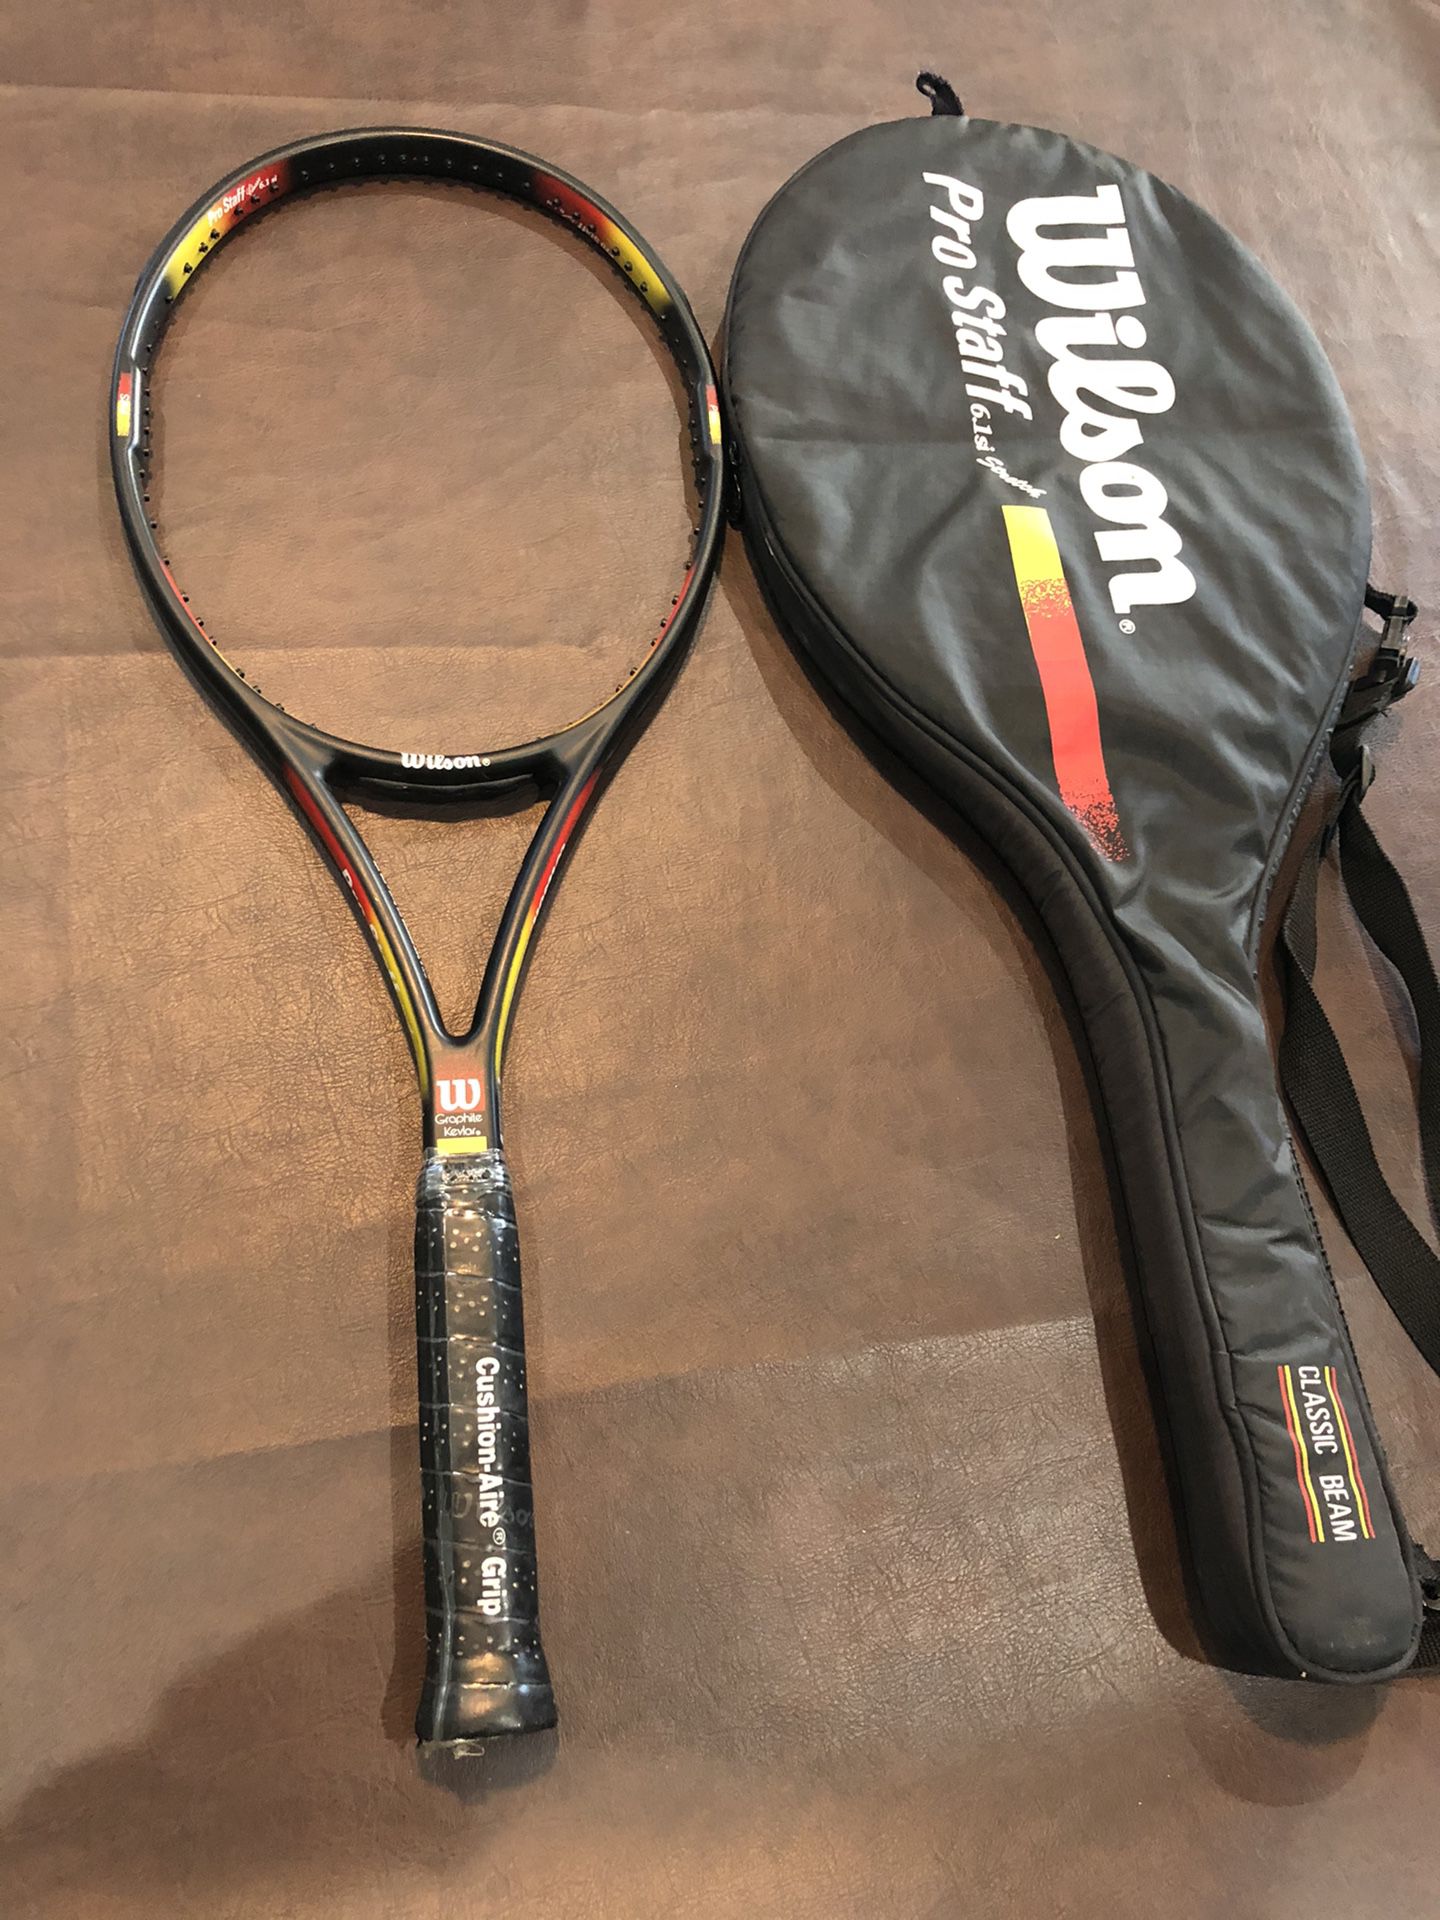 Racket Racquet Tennis wilson Prostaff classic 6.1 $70 OBO